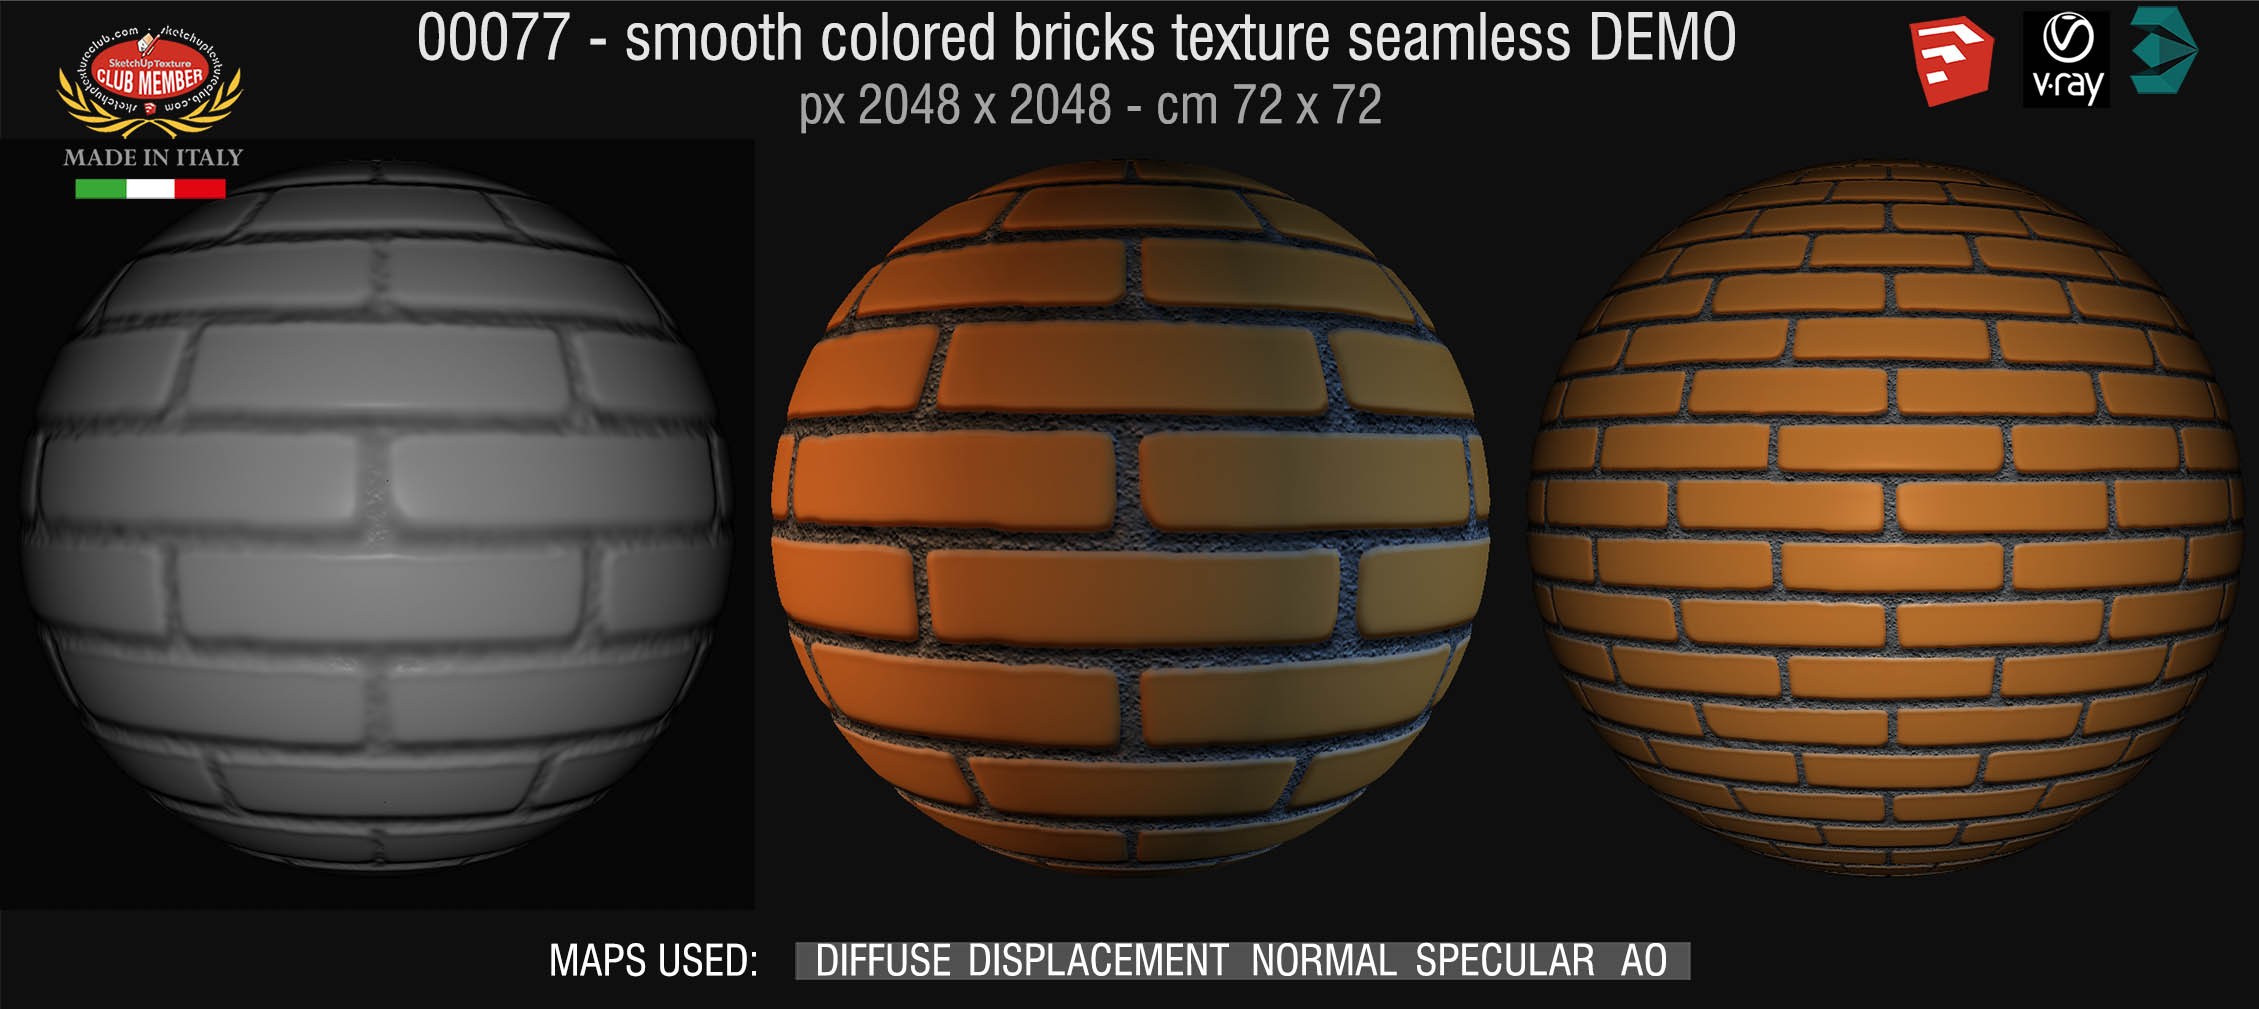 00077 smooth colored bricks texture seamless + maps DEMO